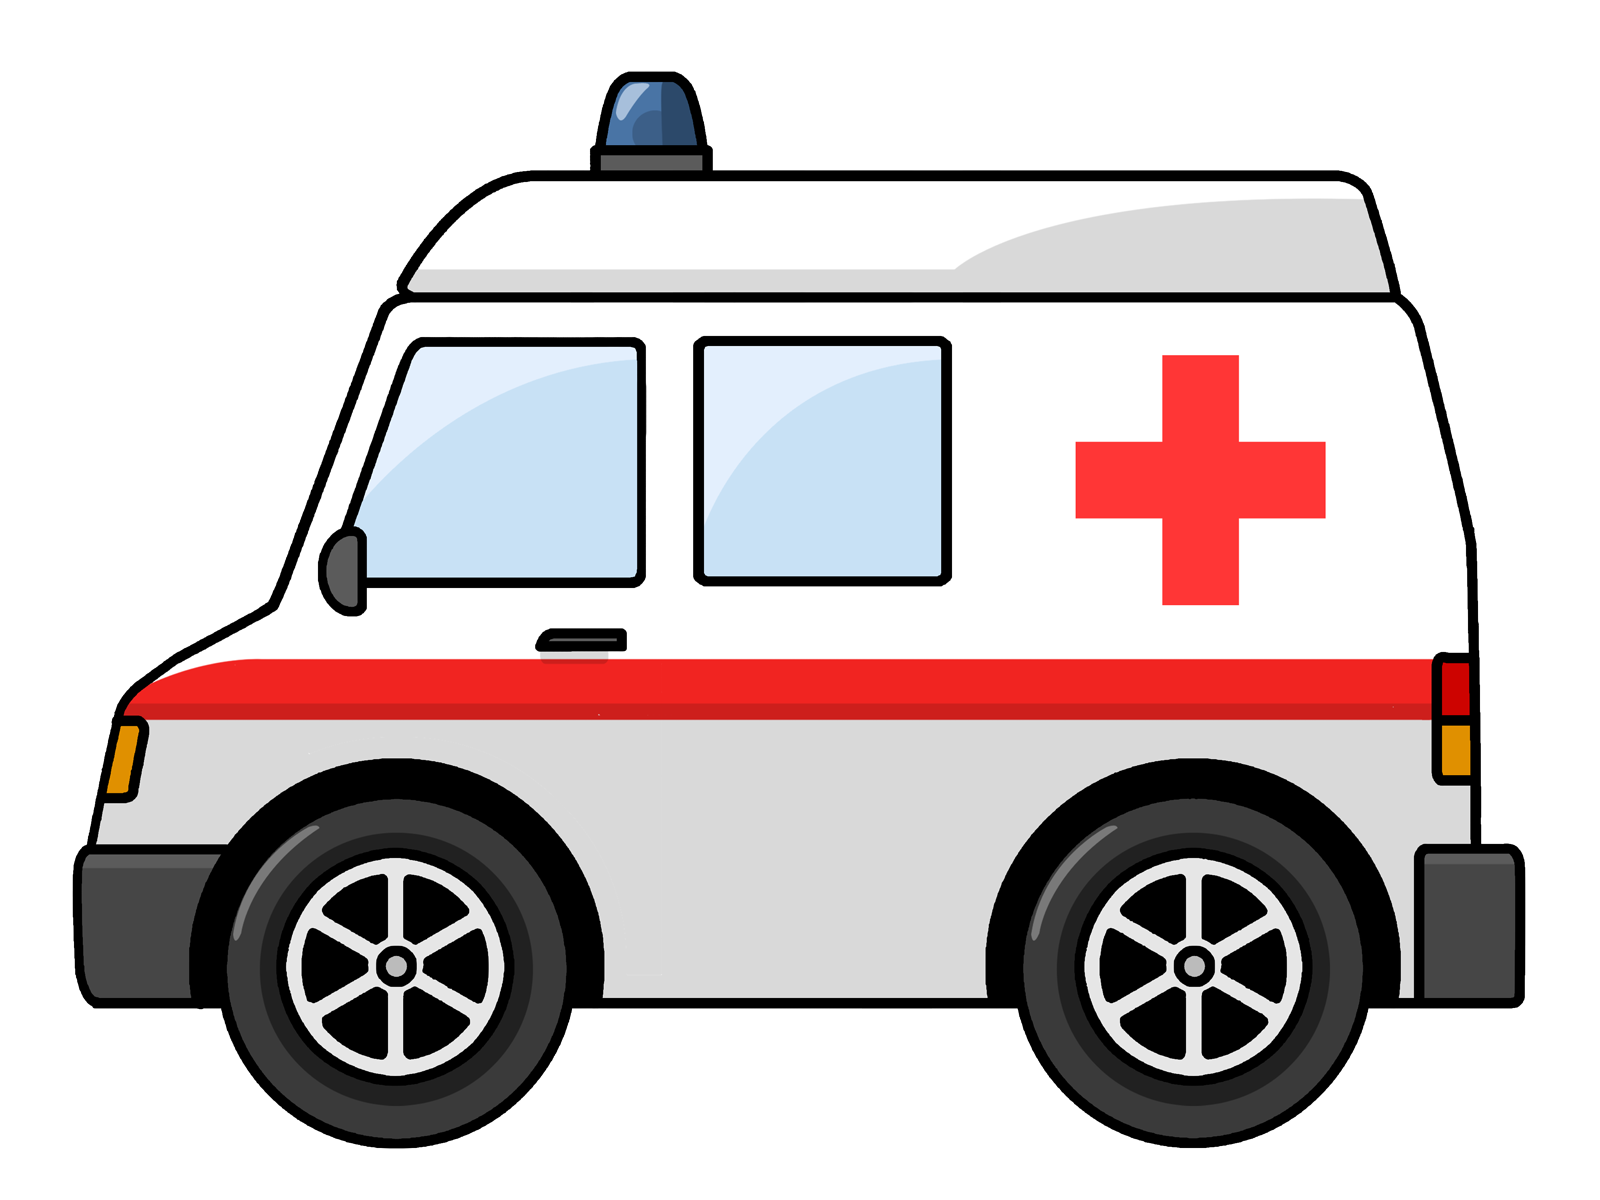 clipart ambulance